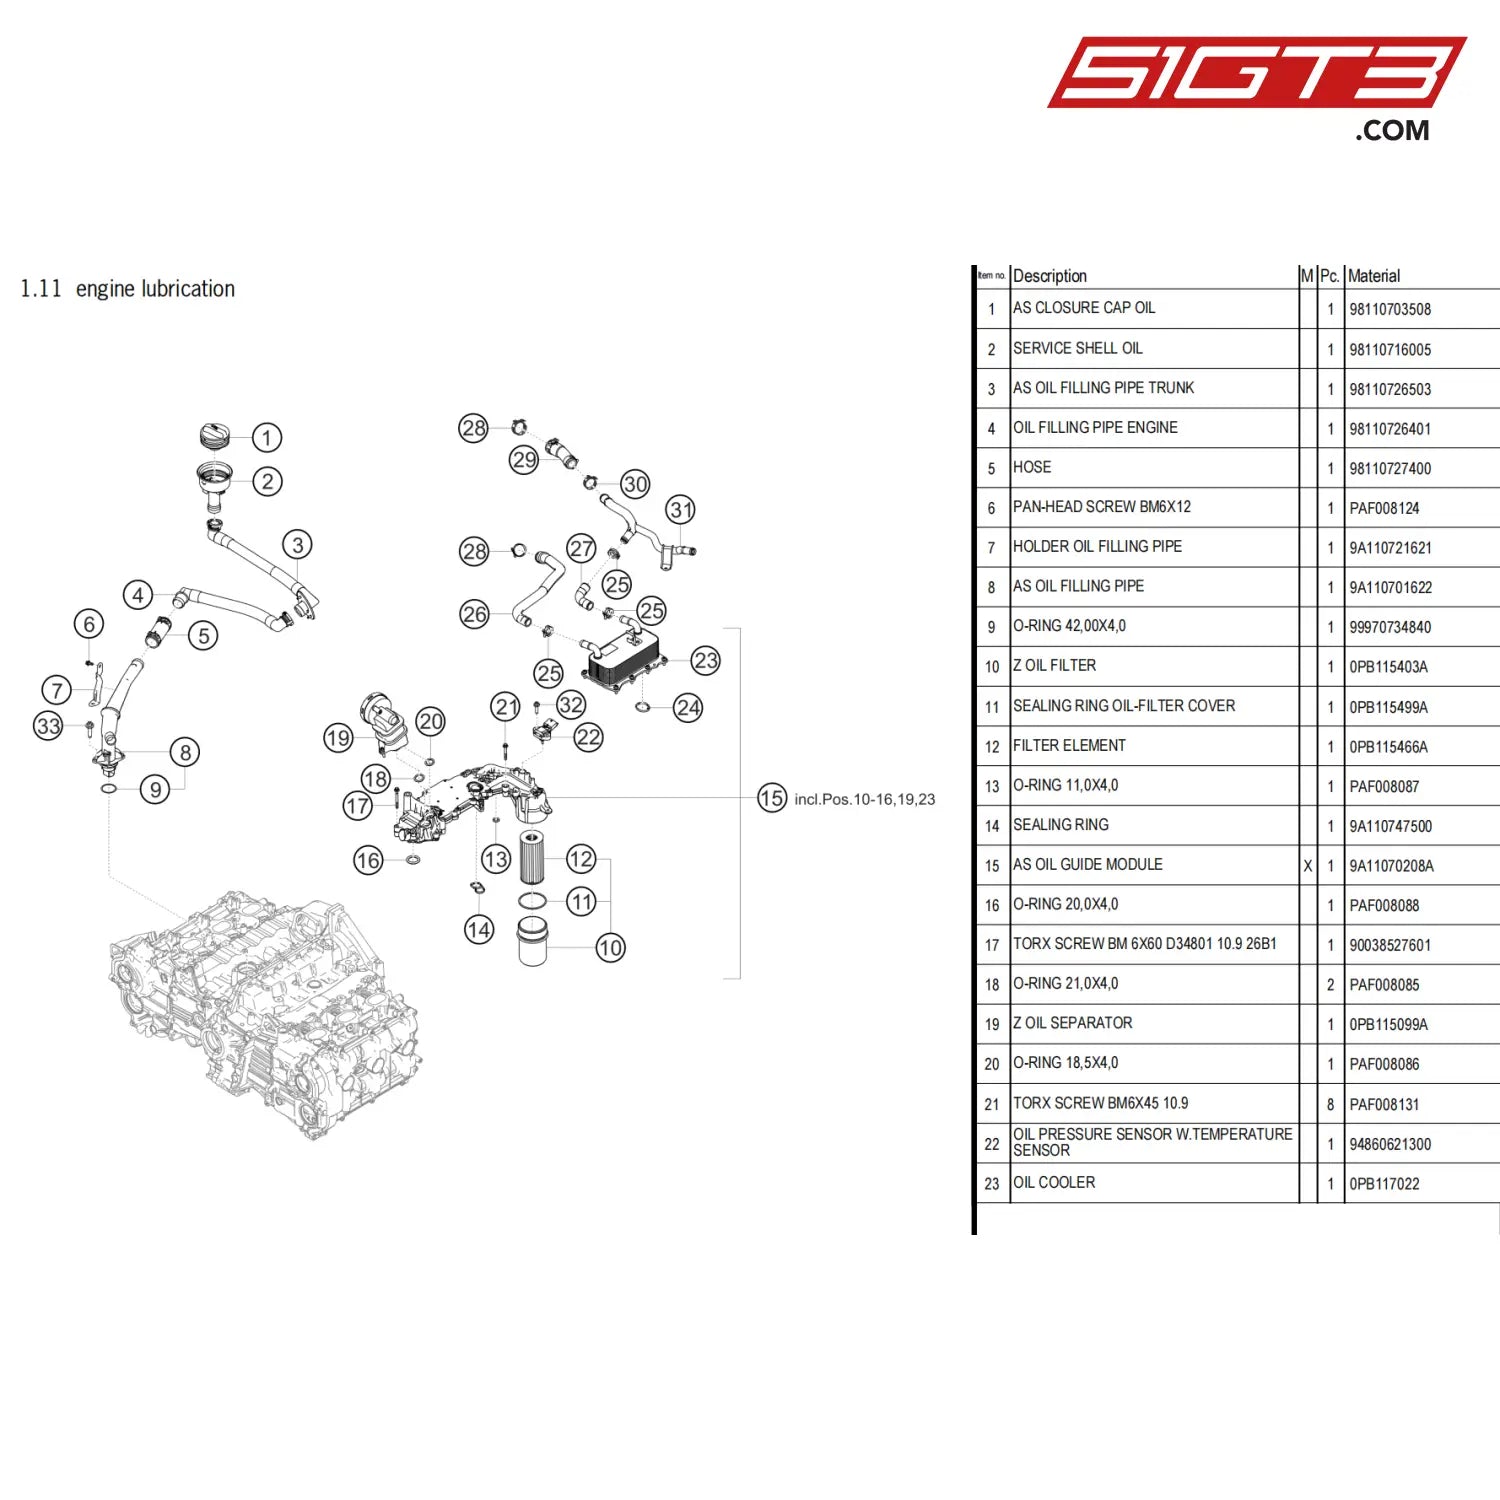 As Oil Guide Module - 9A11070208A [Porsche 718 Cayman Gt4 Clubsport] Engine Lubrication